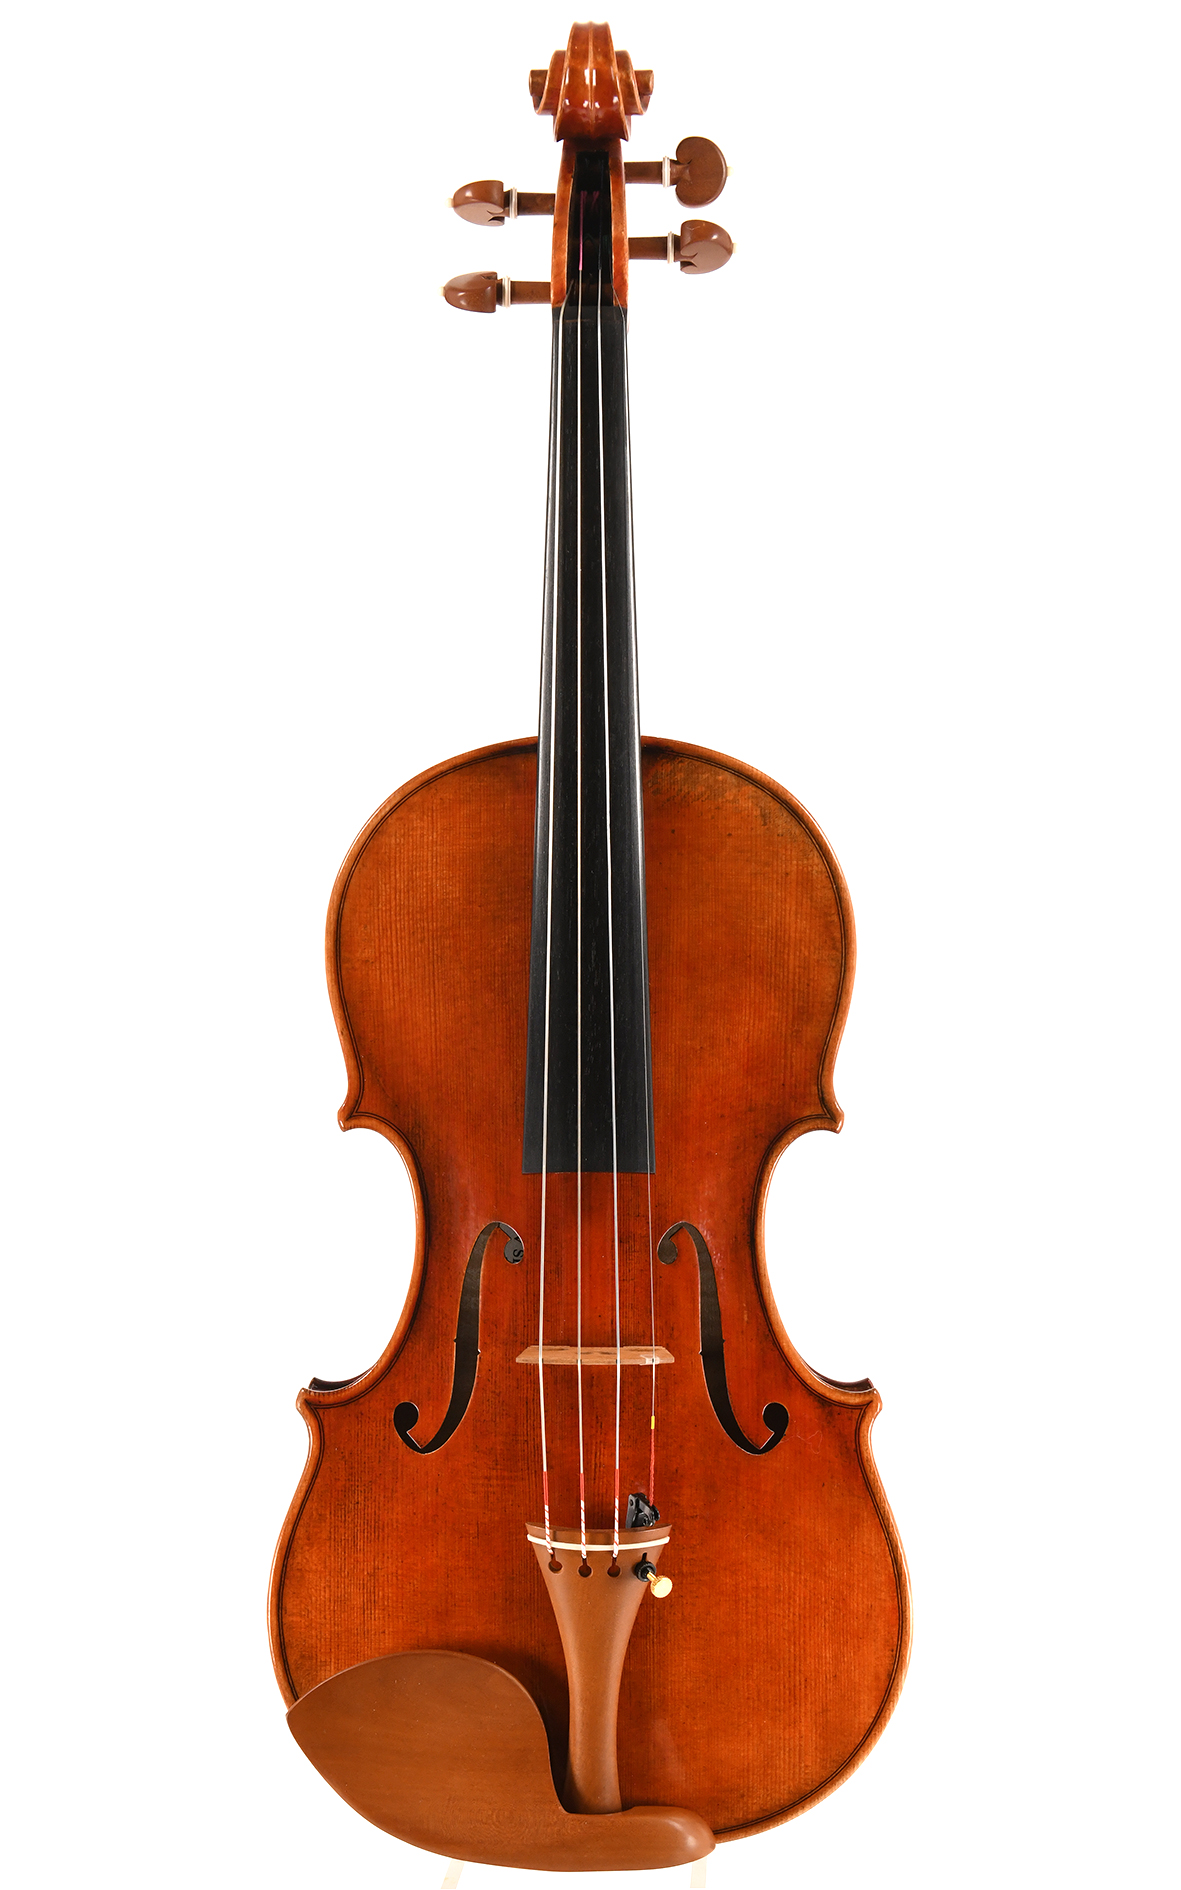 Geige / Meistergeige